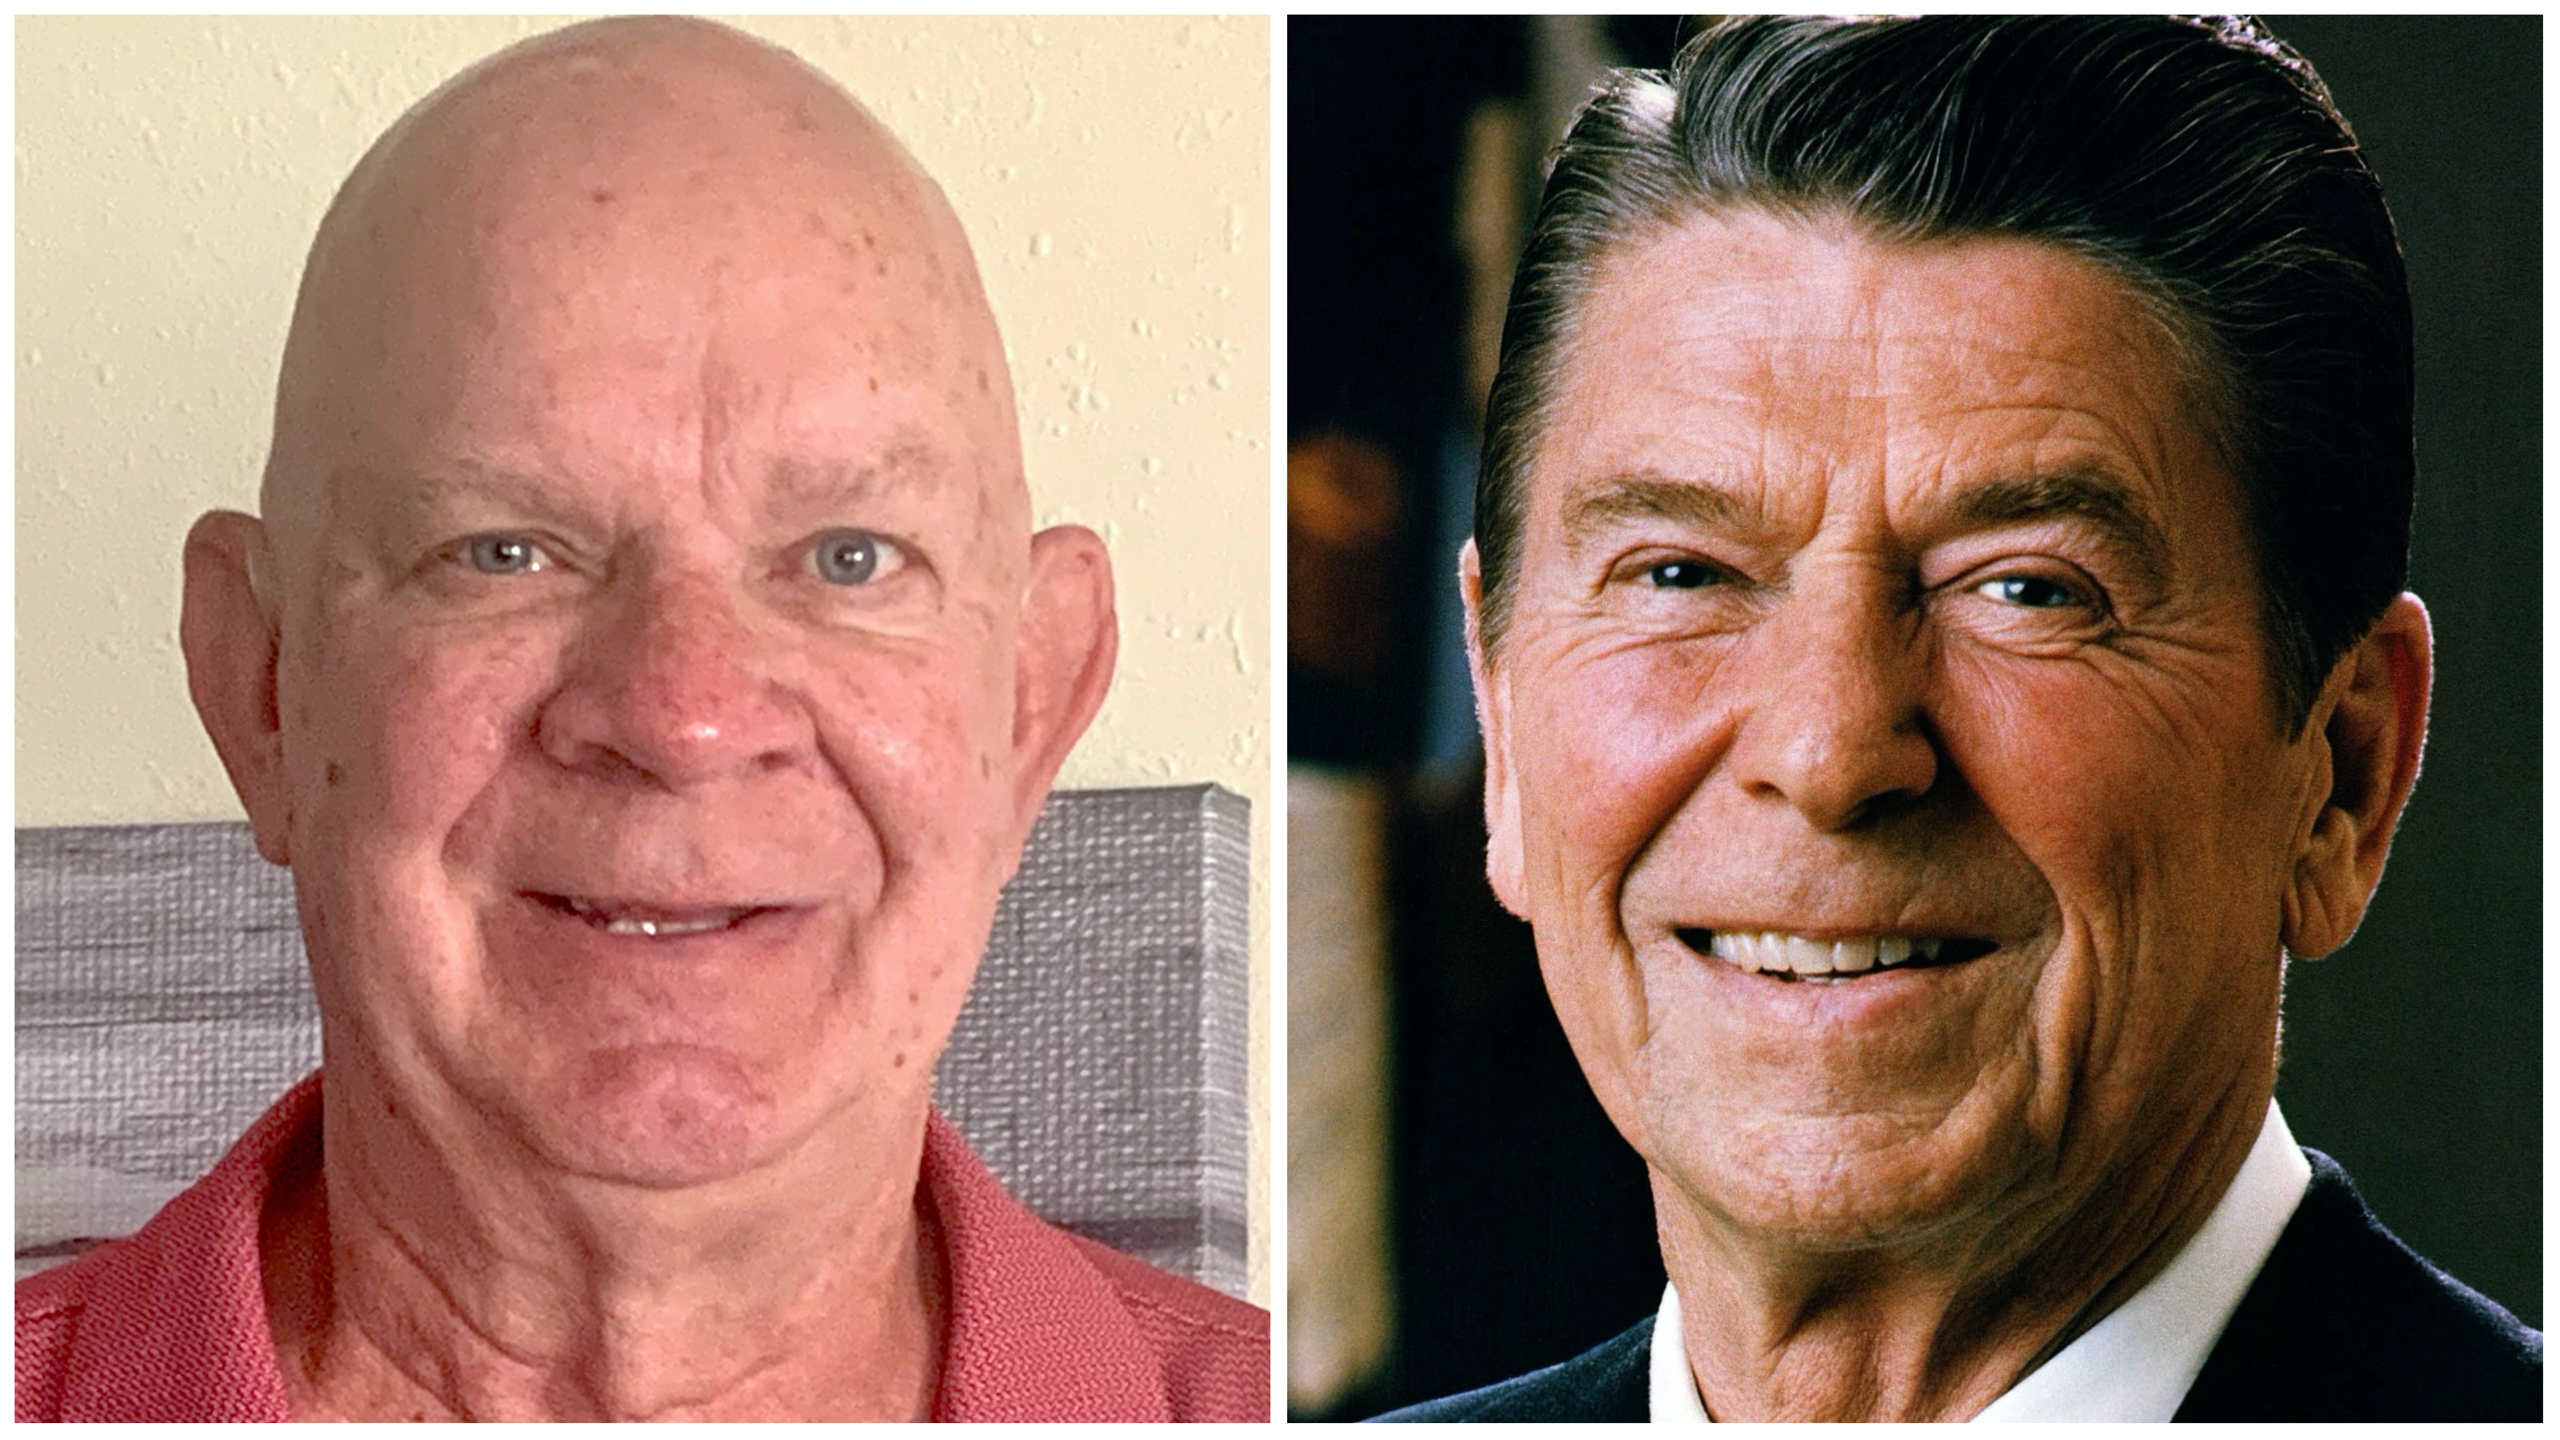 Fitch-Reagan